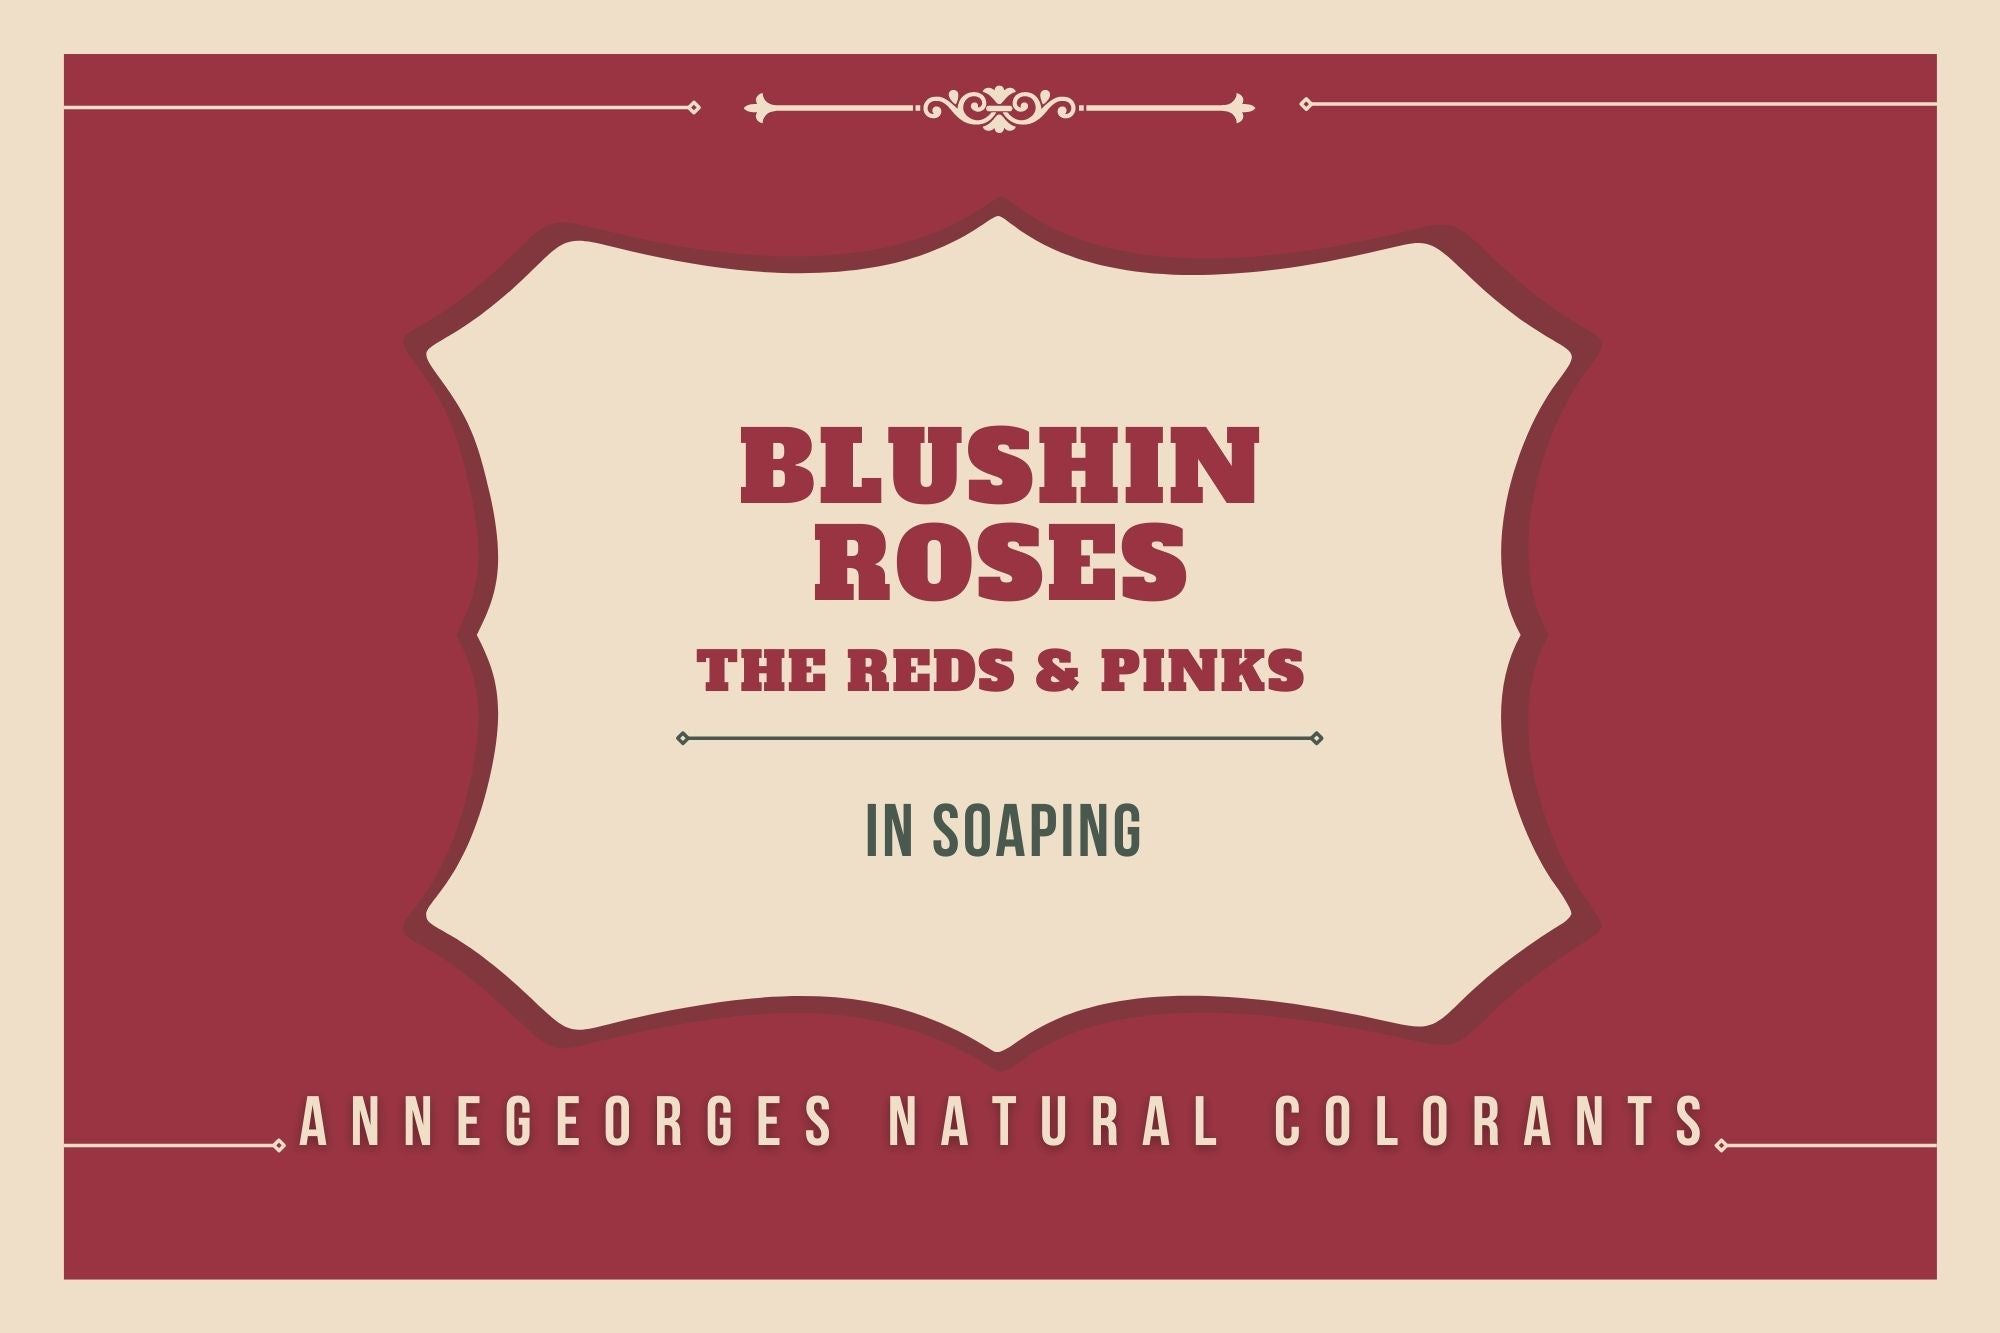 Himalayan Rhubarb Soap Recipe: a Natural Red Soap Colorant